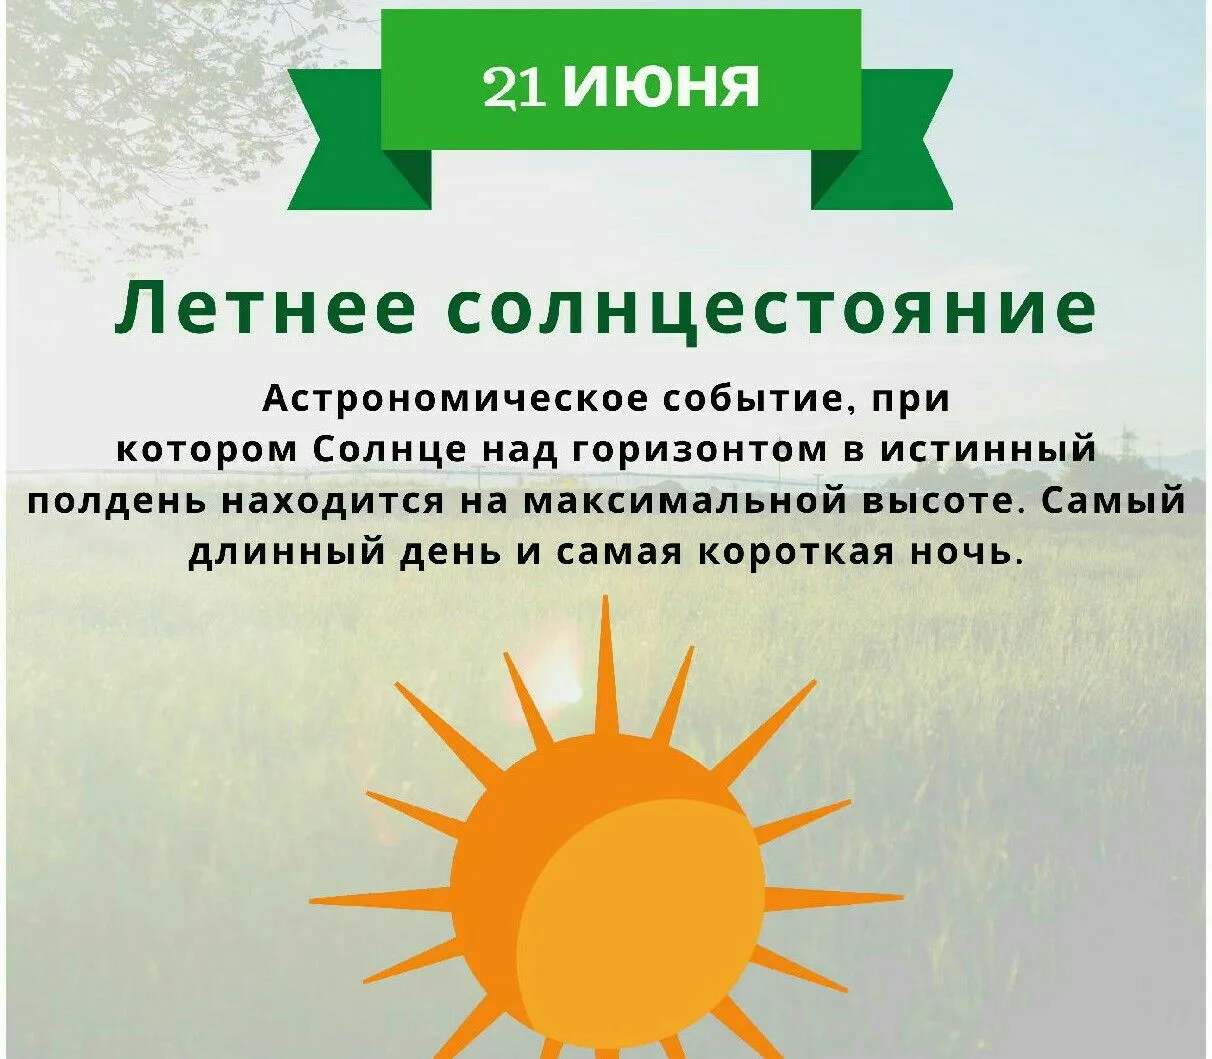 День солнцестояния. Летнее солнцестояние 21 июня. День летнегосолнцнстояния. День летнего солнцеворота. Дни солнца стояния